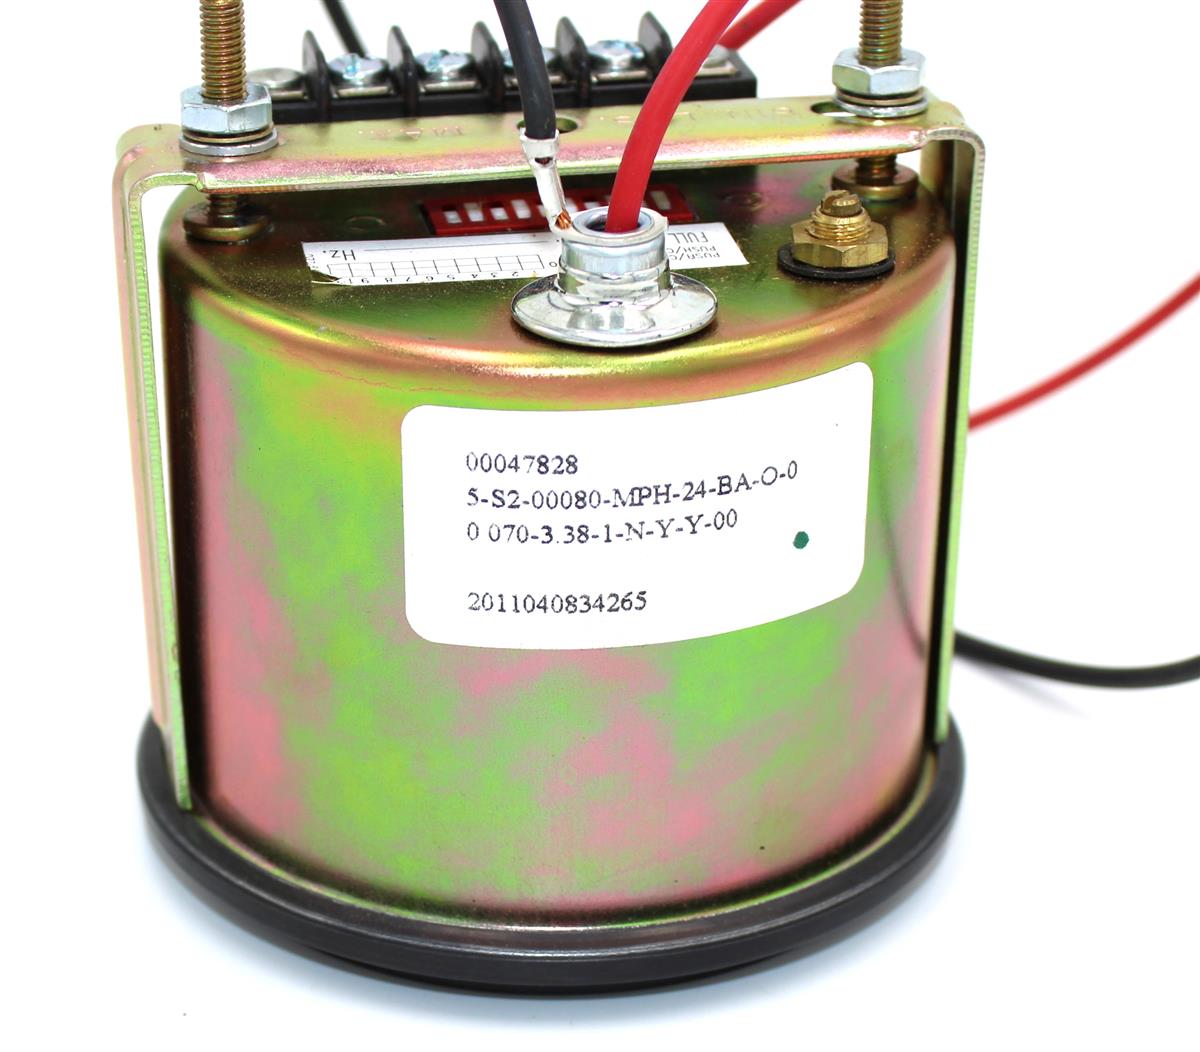 HEM-103 | HEM-103 Speedometer for Oshkosh LVS and MK48 Power Unit  Update (7).JPG